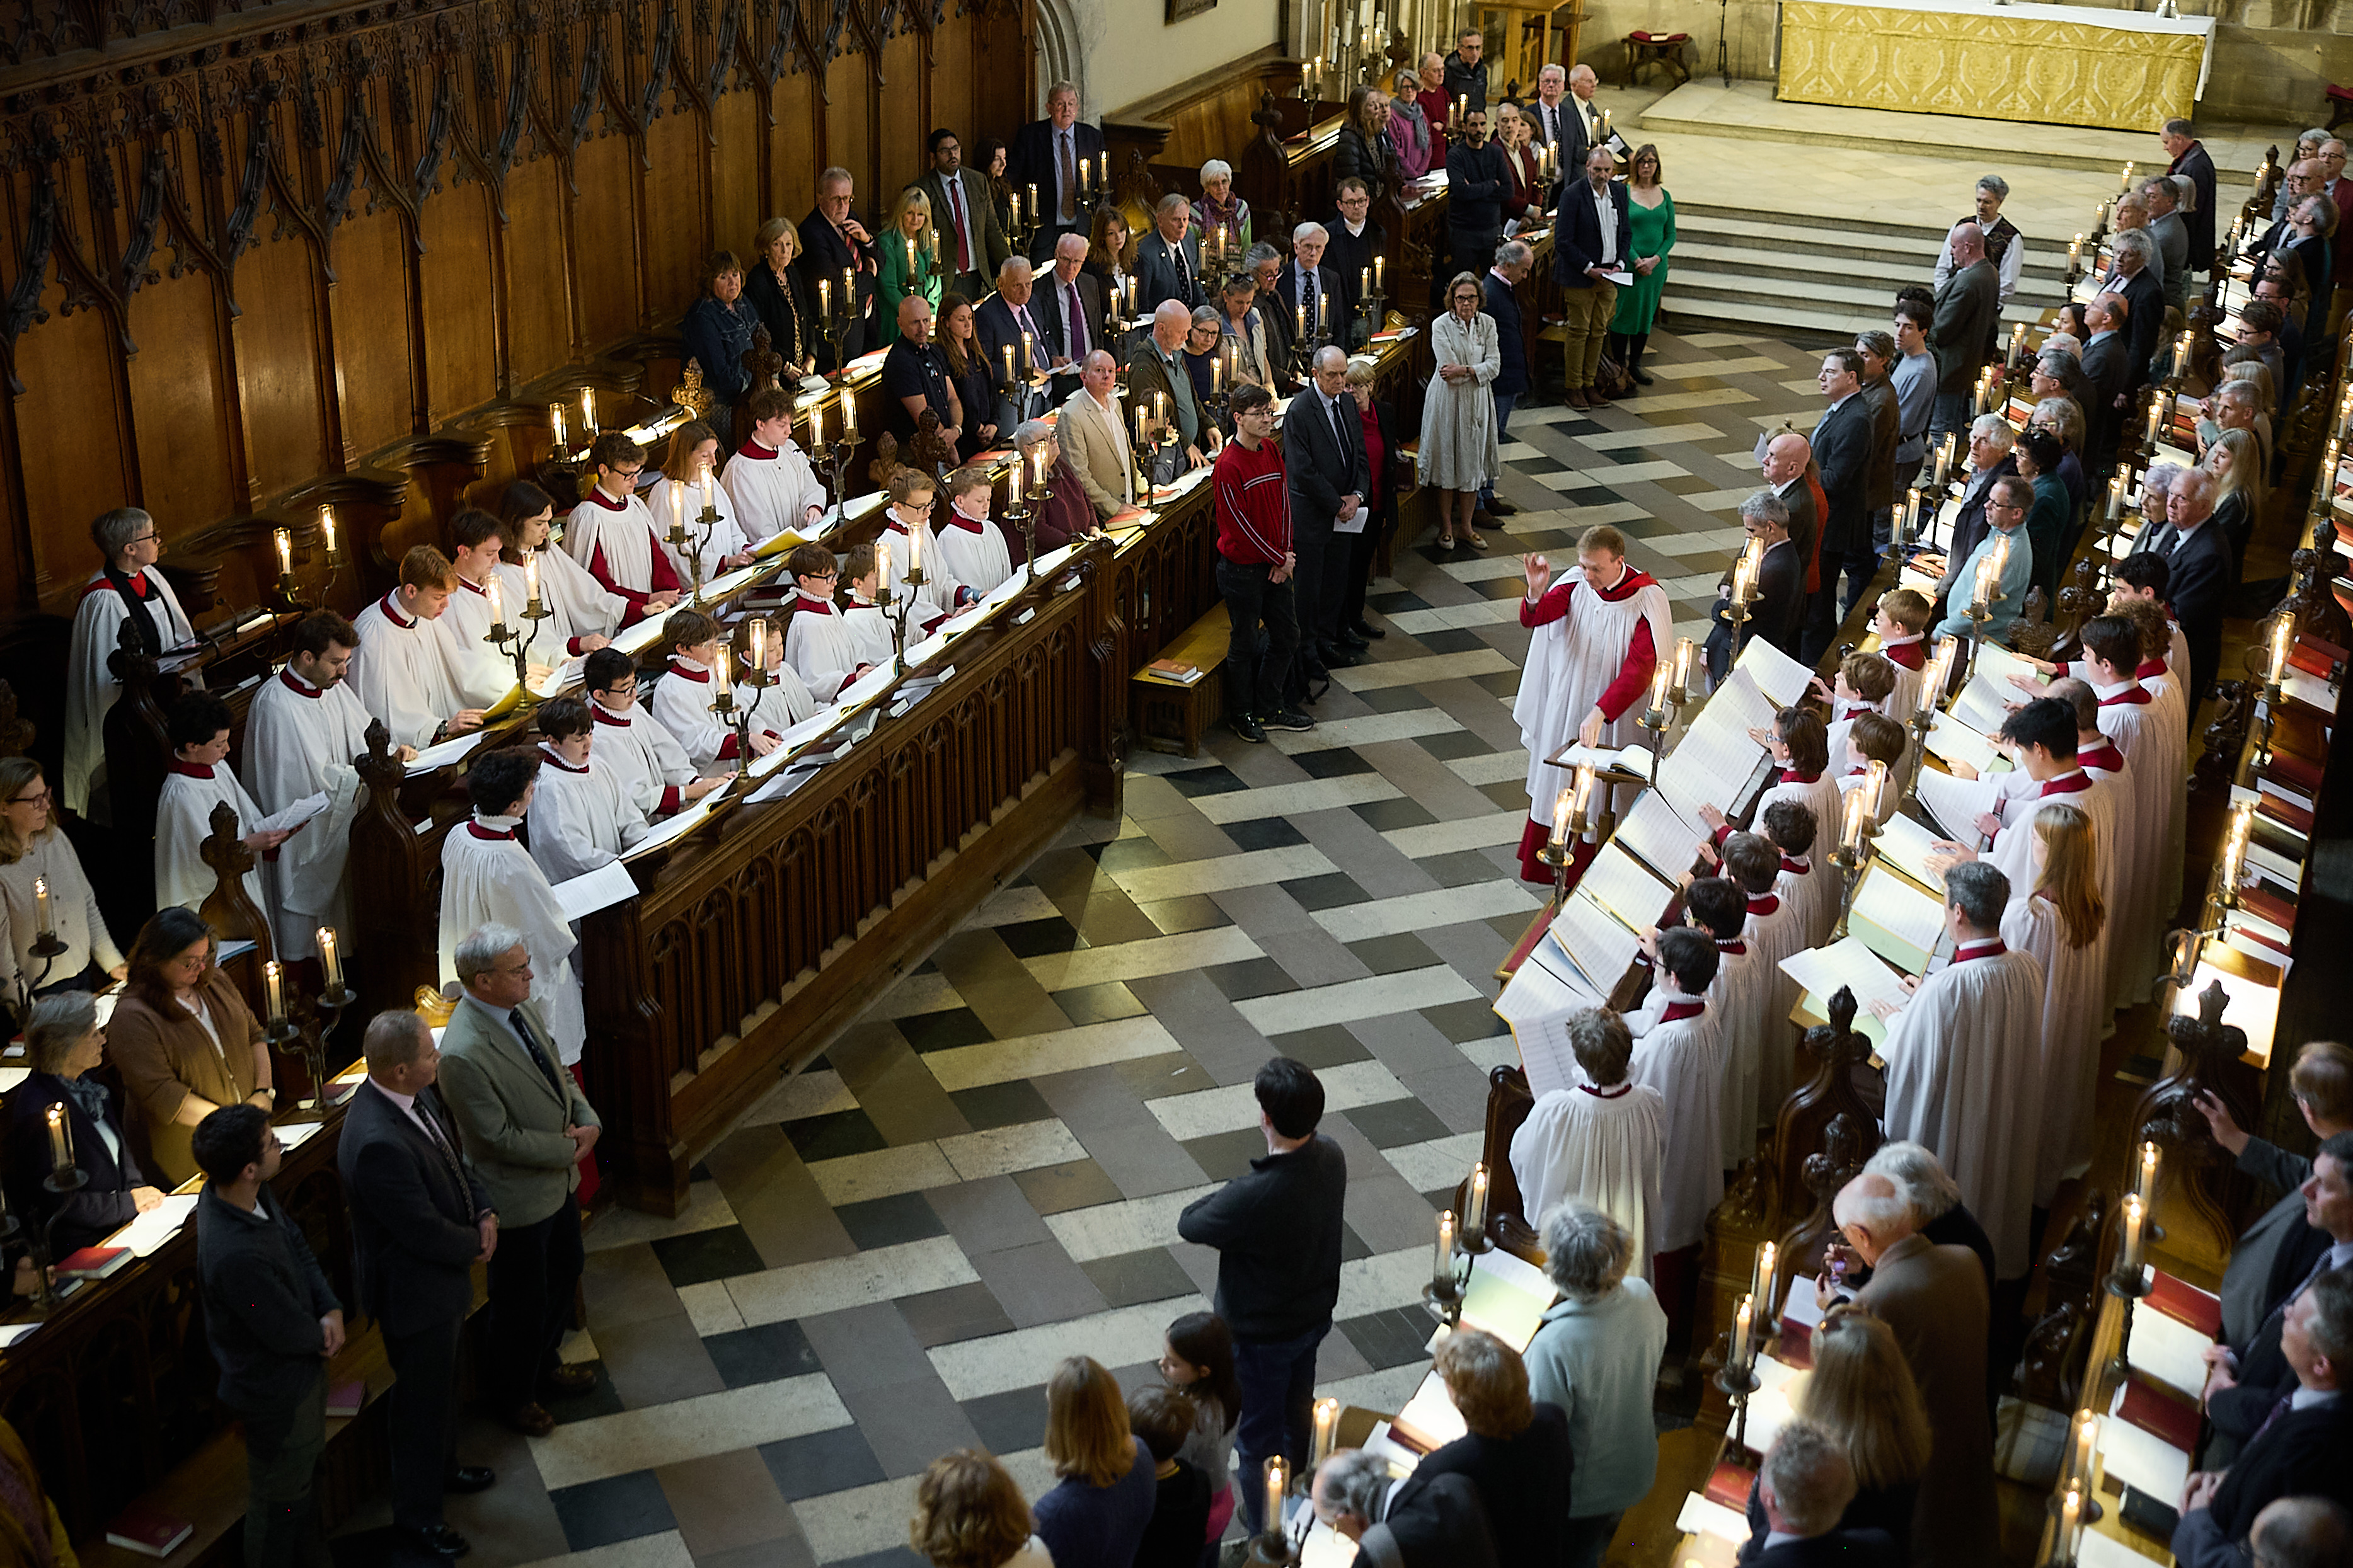 New College Choir at Sir David Lumsden's Evensong